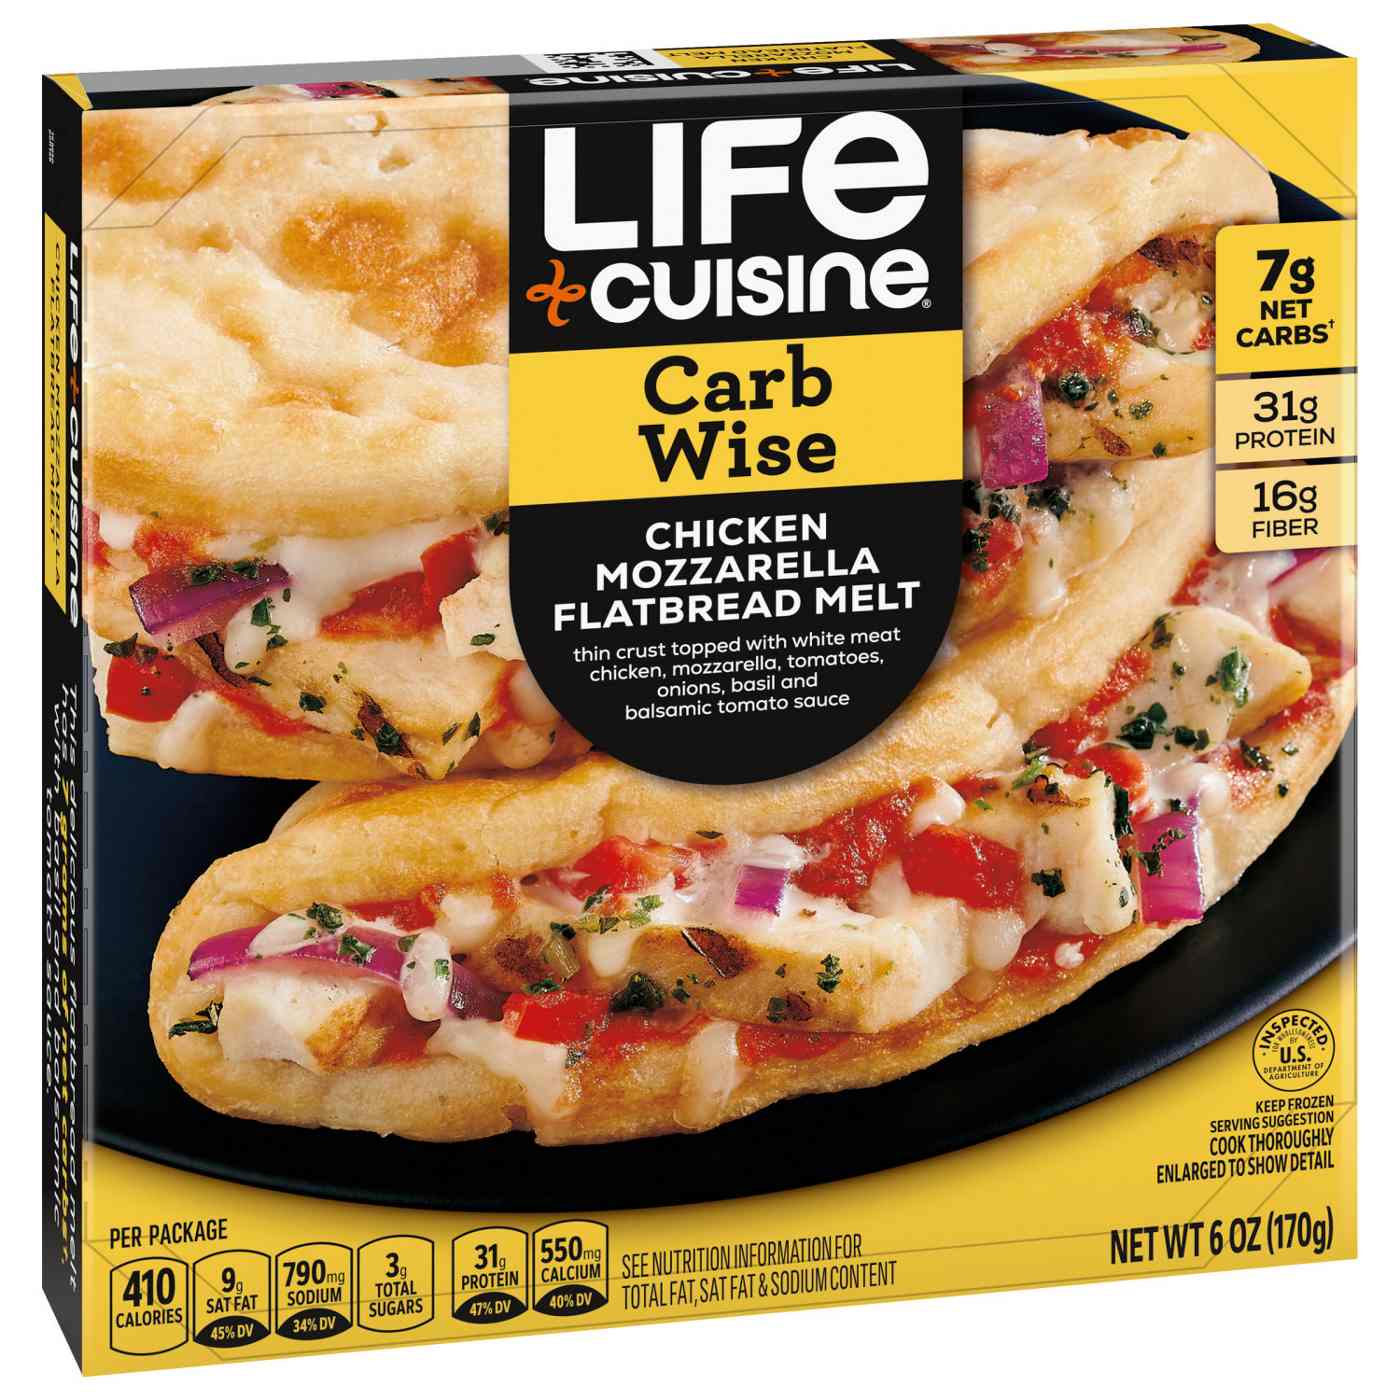 Life Cuisine Carb Wise Frozen Flatbread Melt - Chicken Mozzarella; image 4 of 7